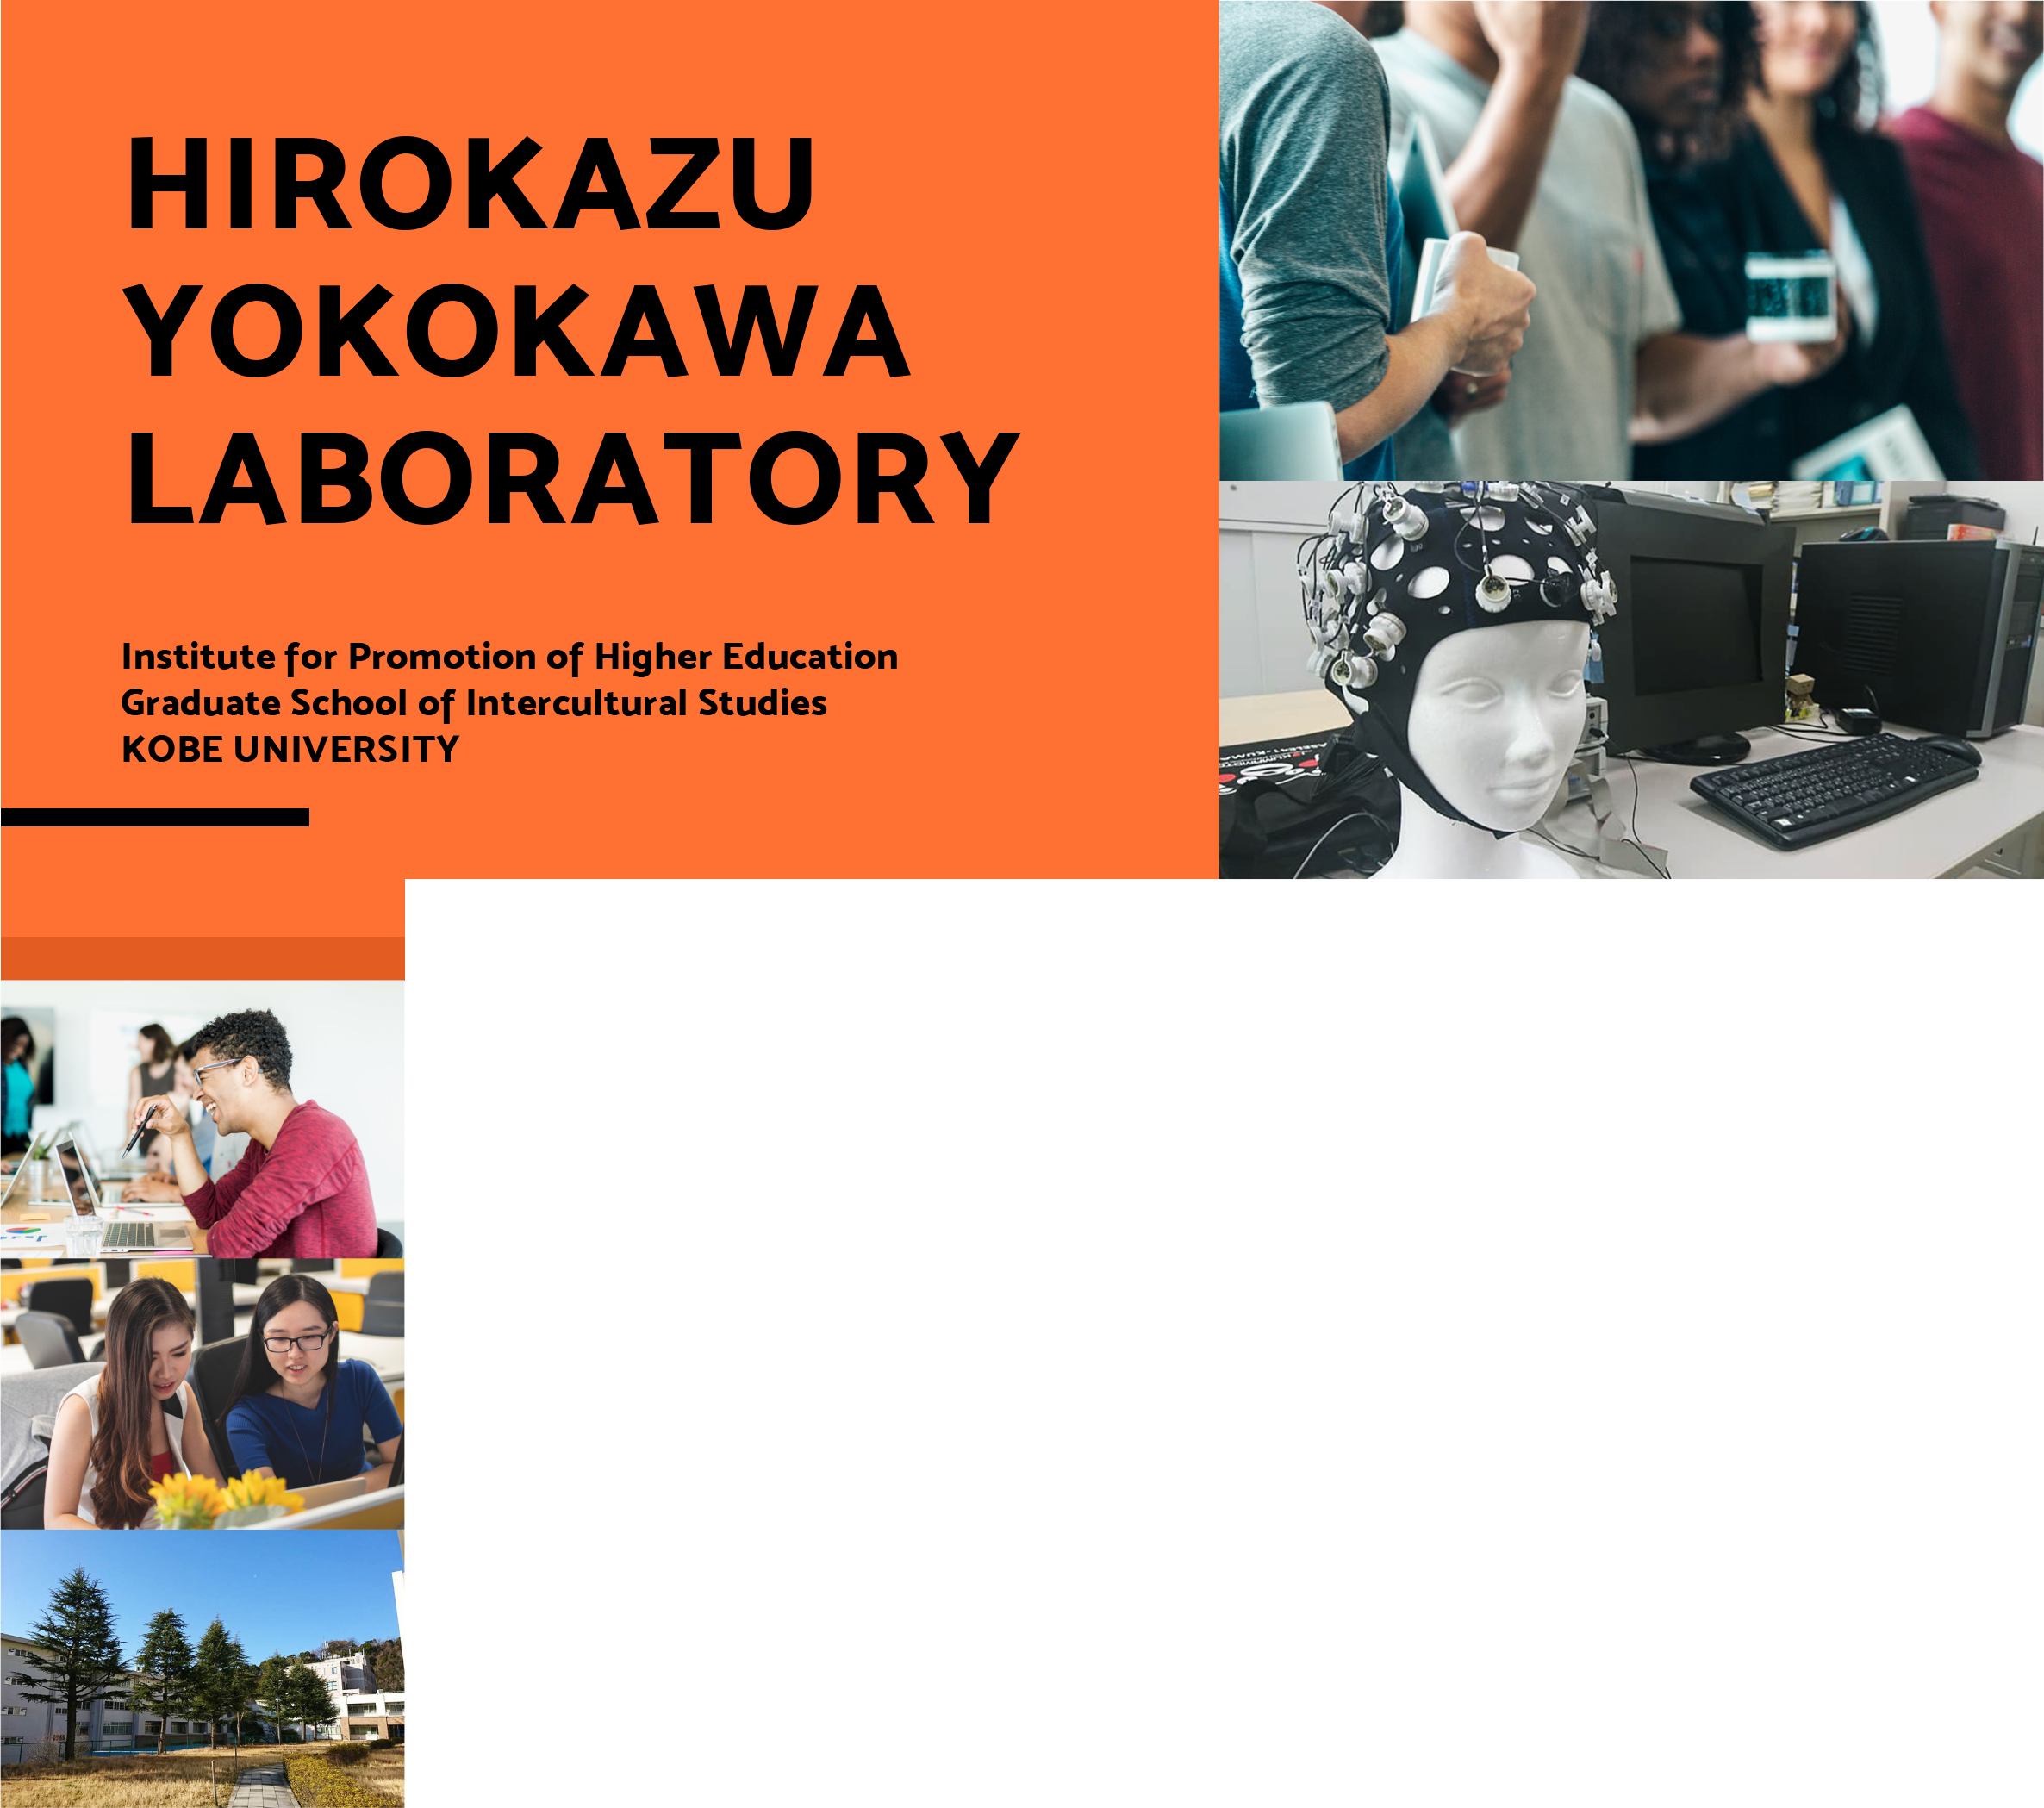 横川博一研究室 HIROKAZU YOKOKAWA LABORATORY
           Institute for Promotion of Higher Education
          Graduate School of Intercultural Studies
          KOBE UNIVERCITY